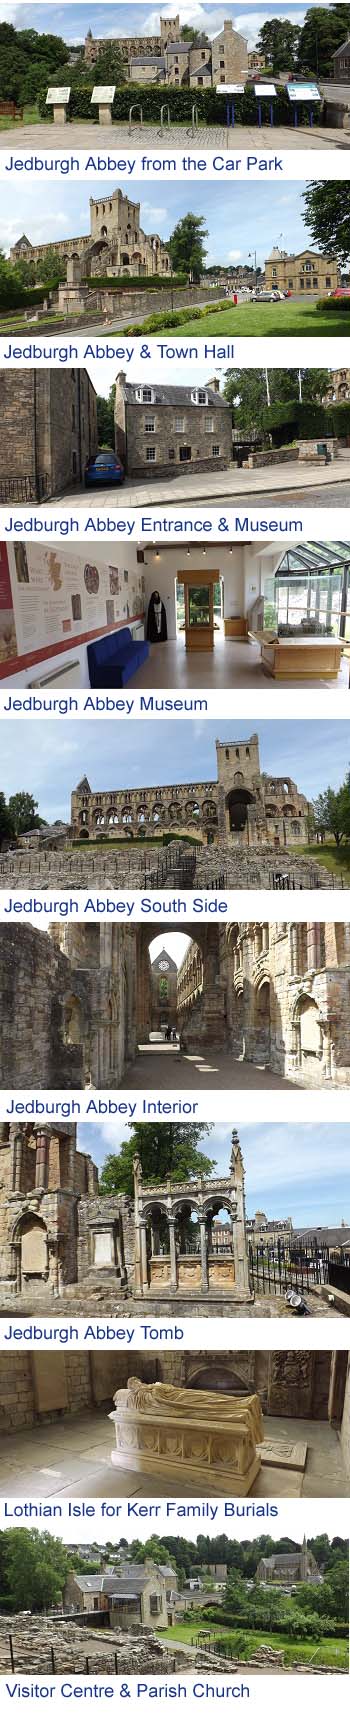 Jedburgh Abbey Images